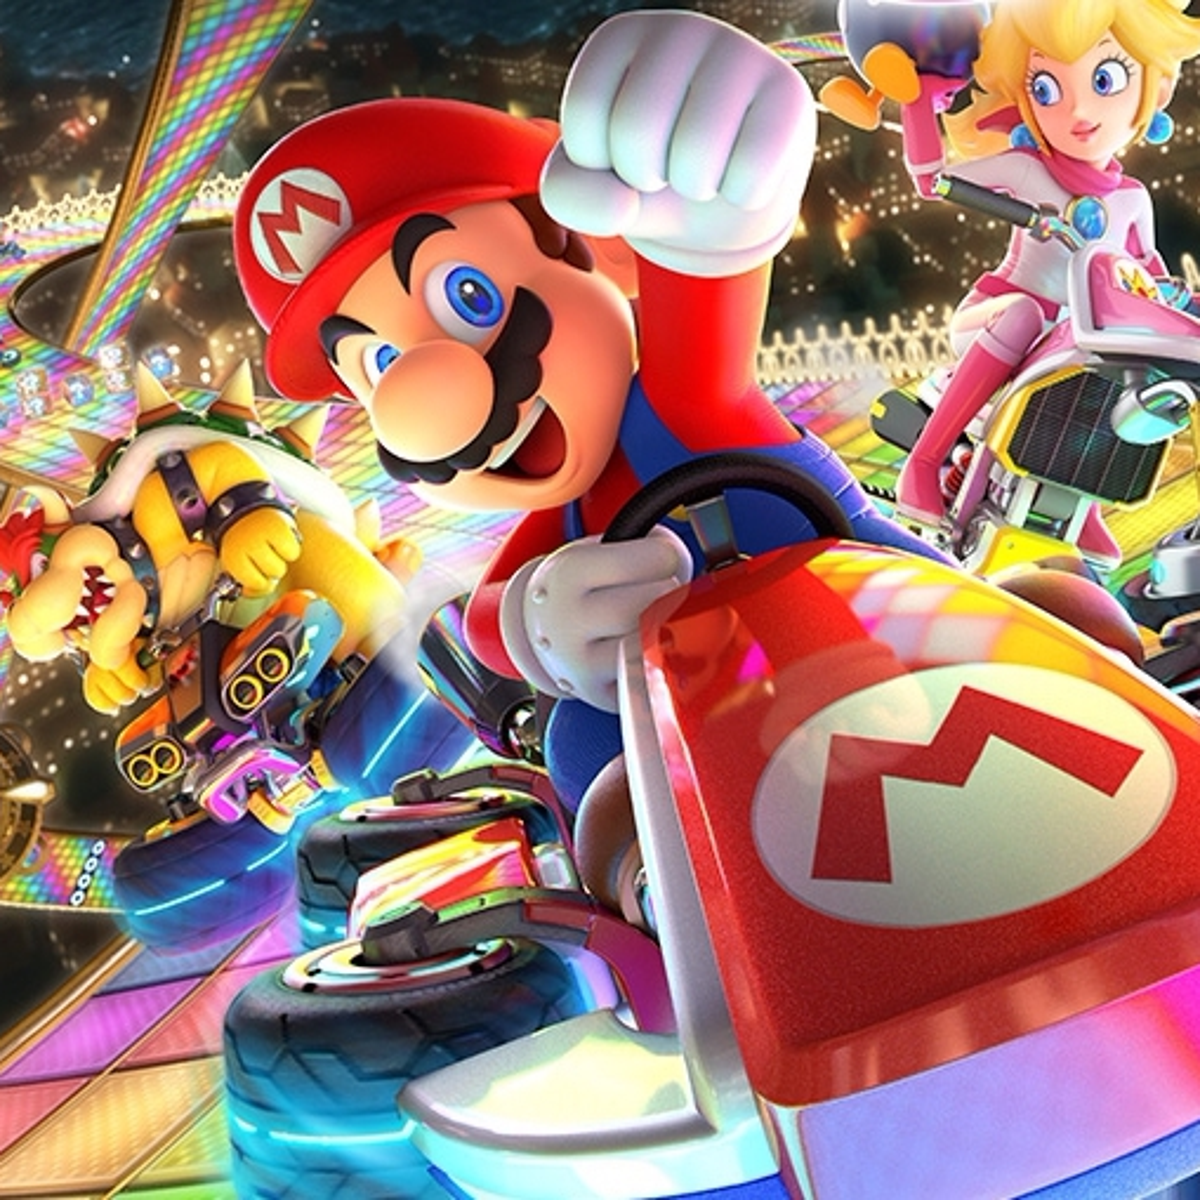 Tech Evolution: 25 years of Super Mario Kart